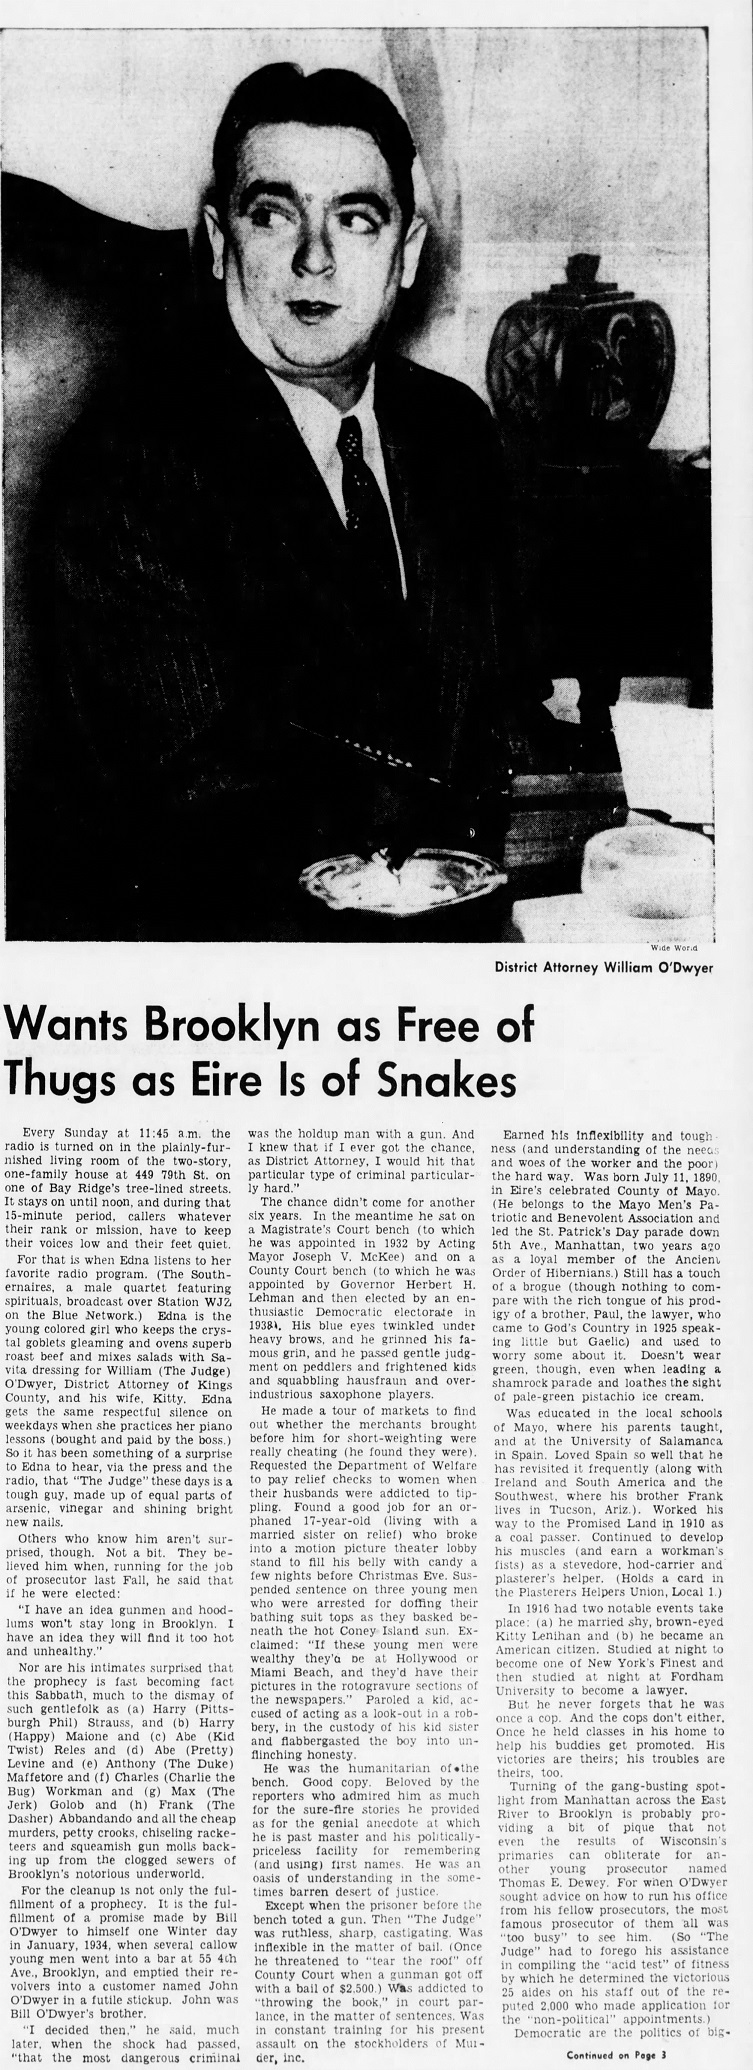 The_Brooklyn_Daily_Eagle_Sun__Apr_7__1940_(5).jpg